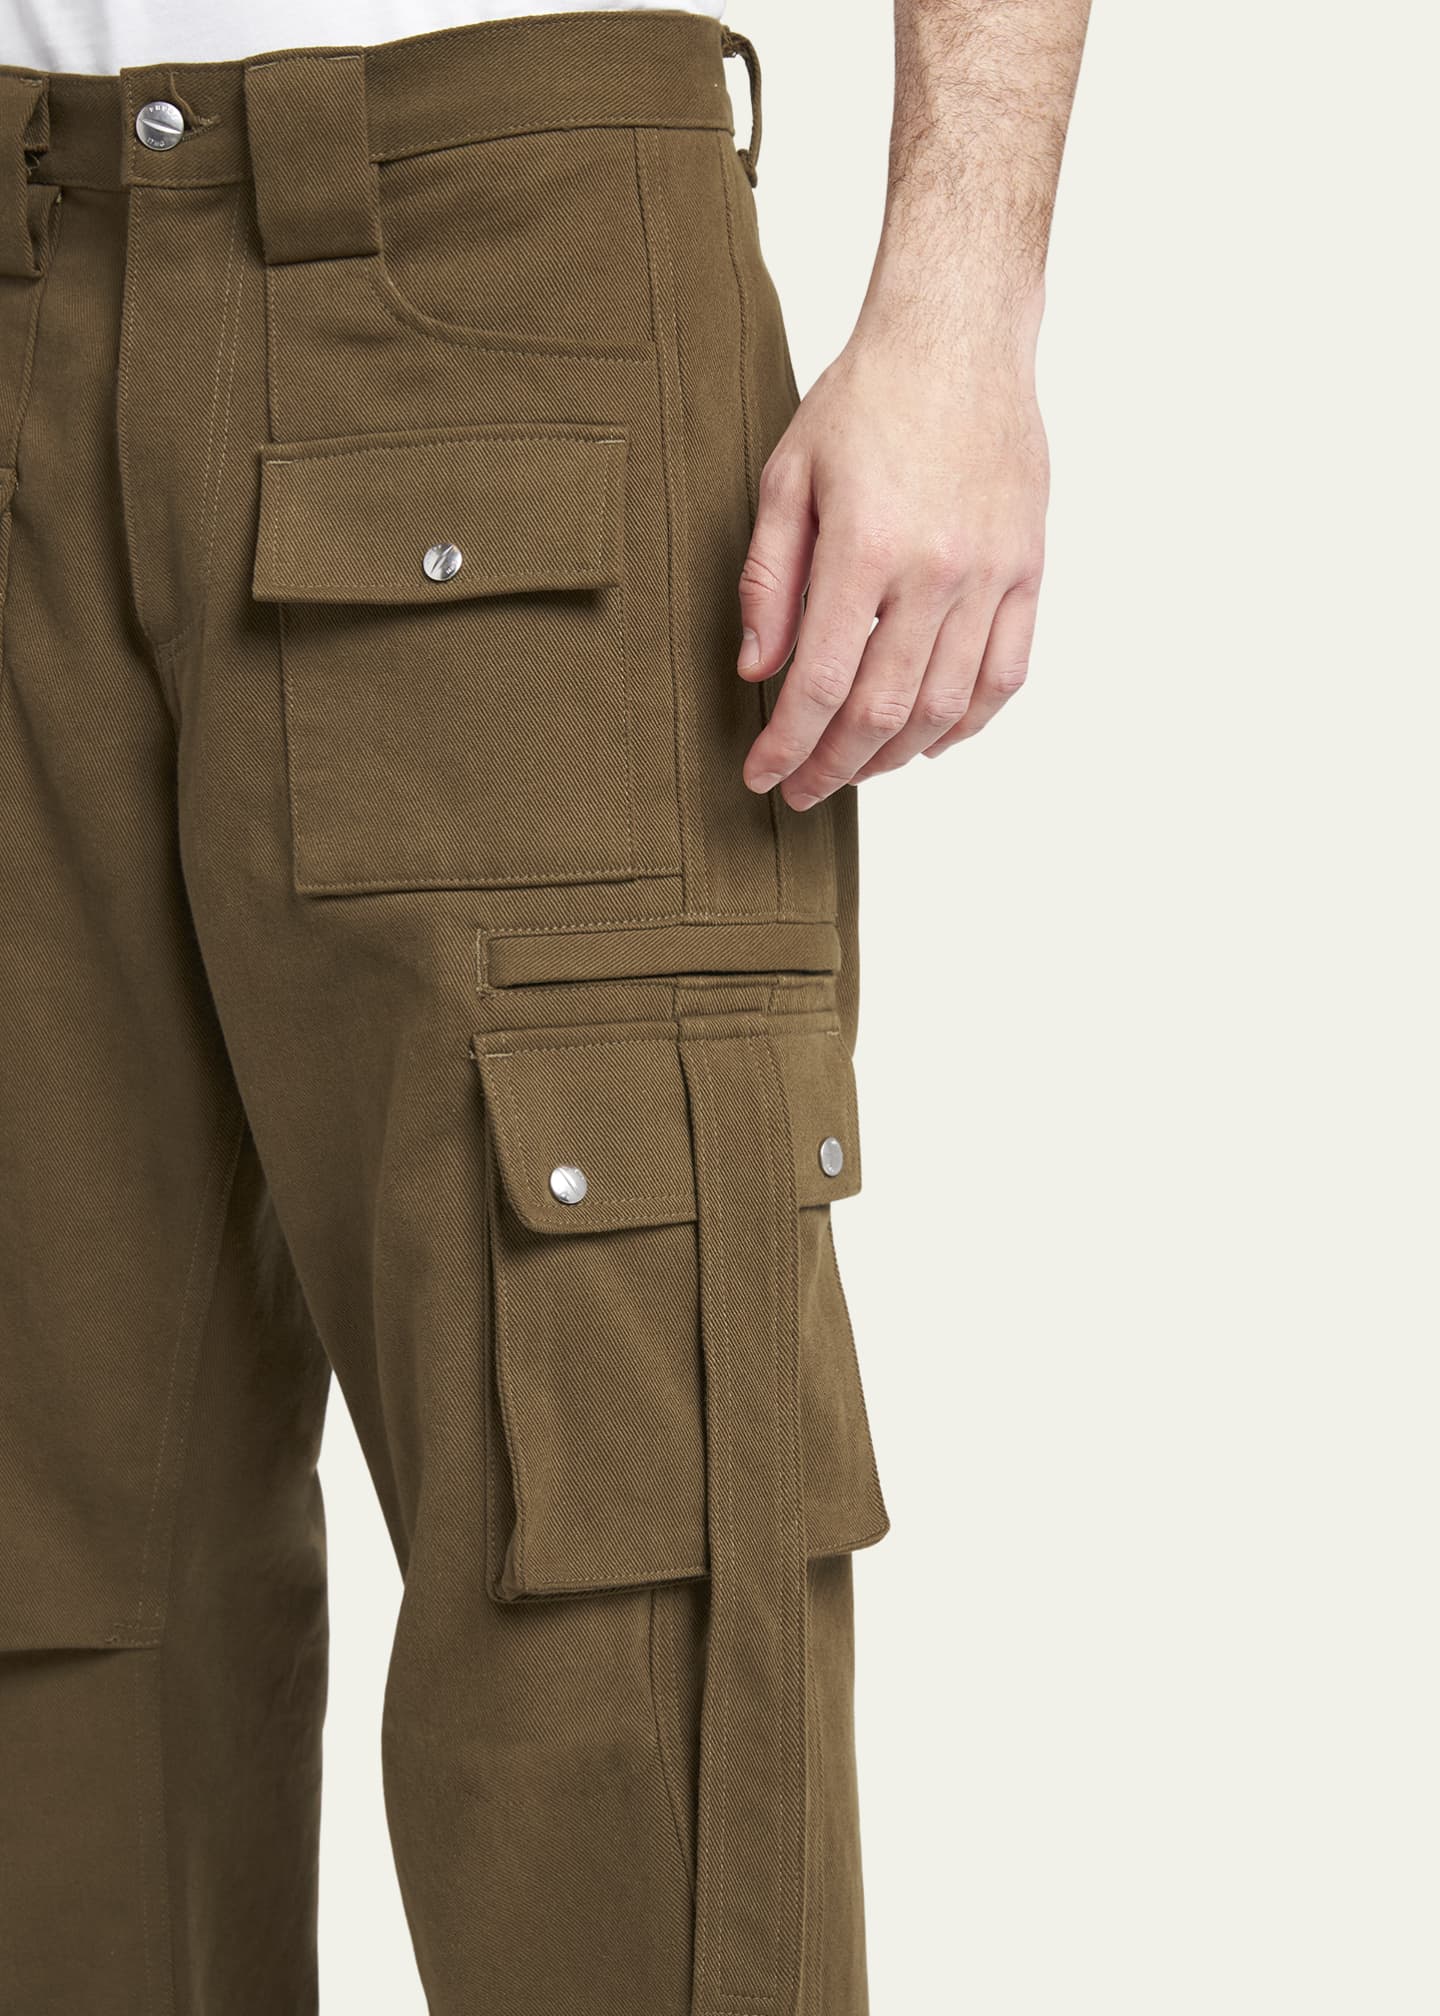 Multi-pocket cargo pants, Pants, Shorts and pants